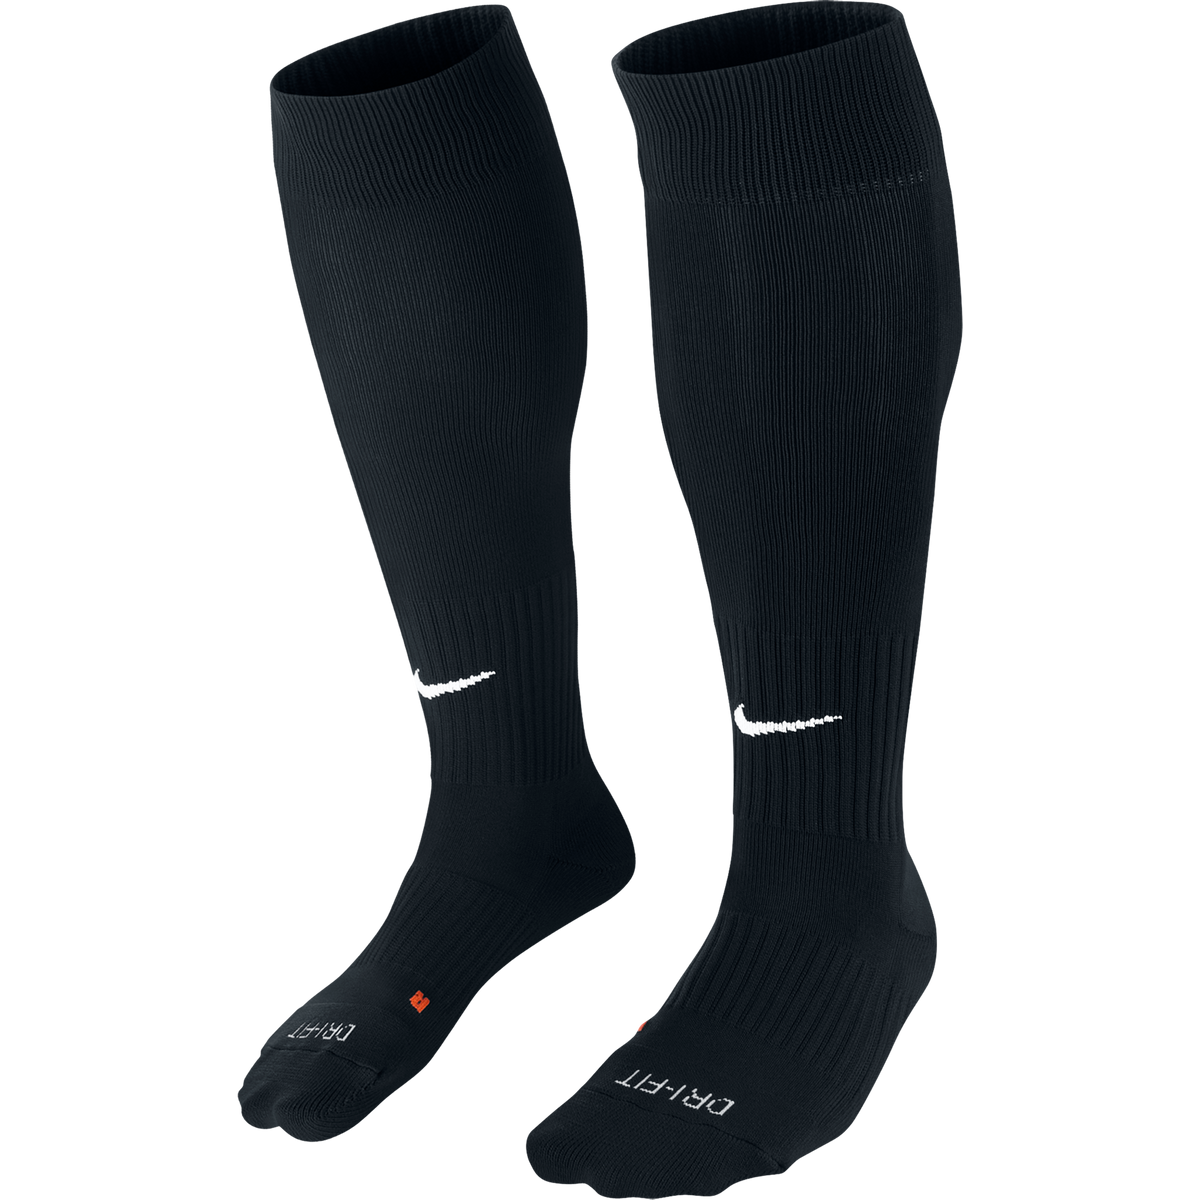 SW Performance Coaching - Nike classic socks, Black.